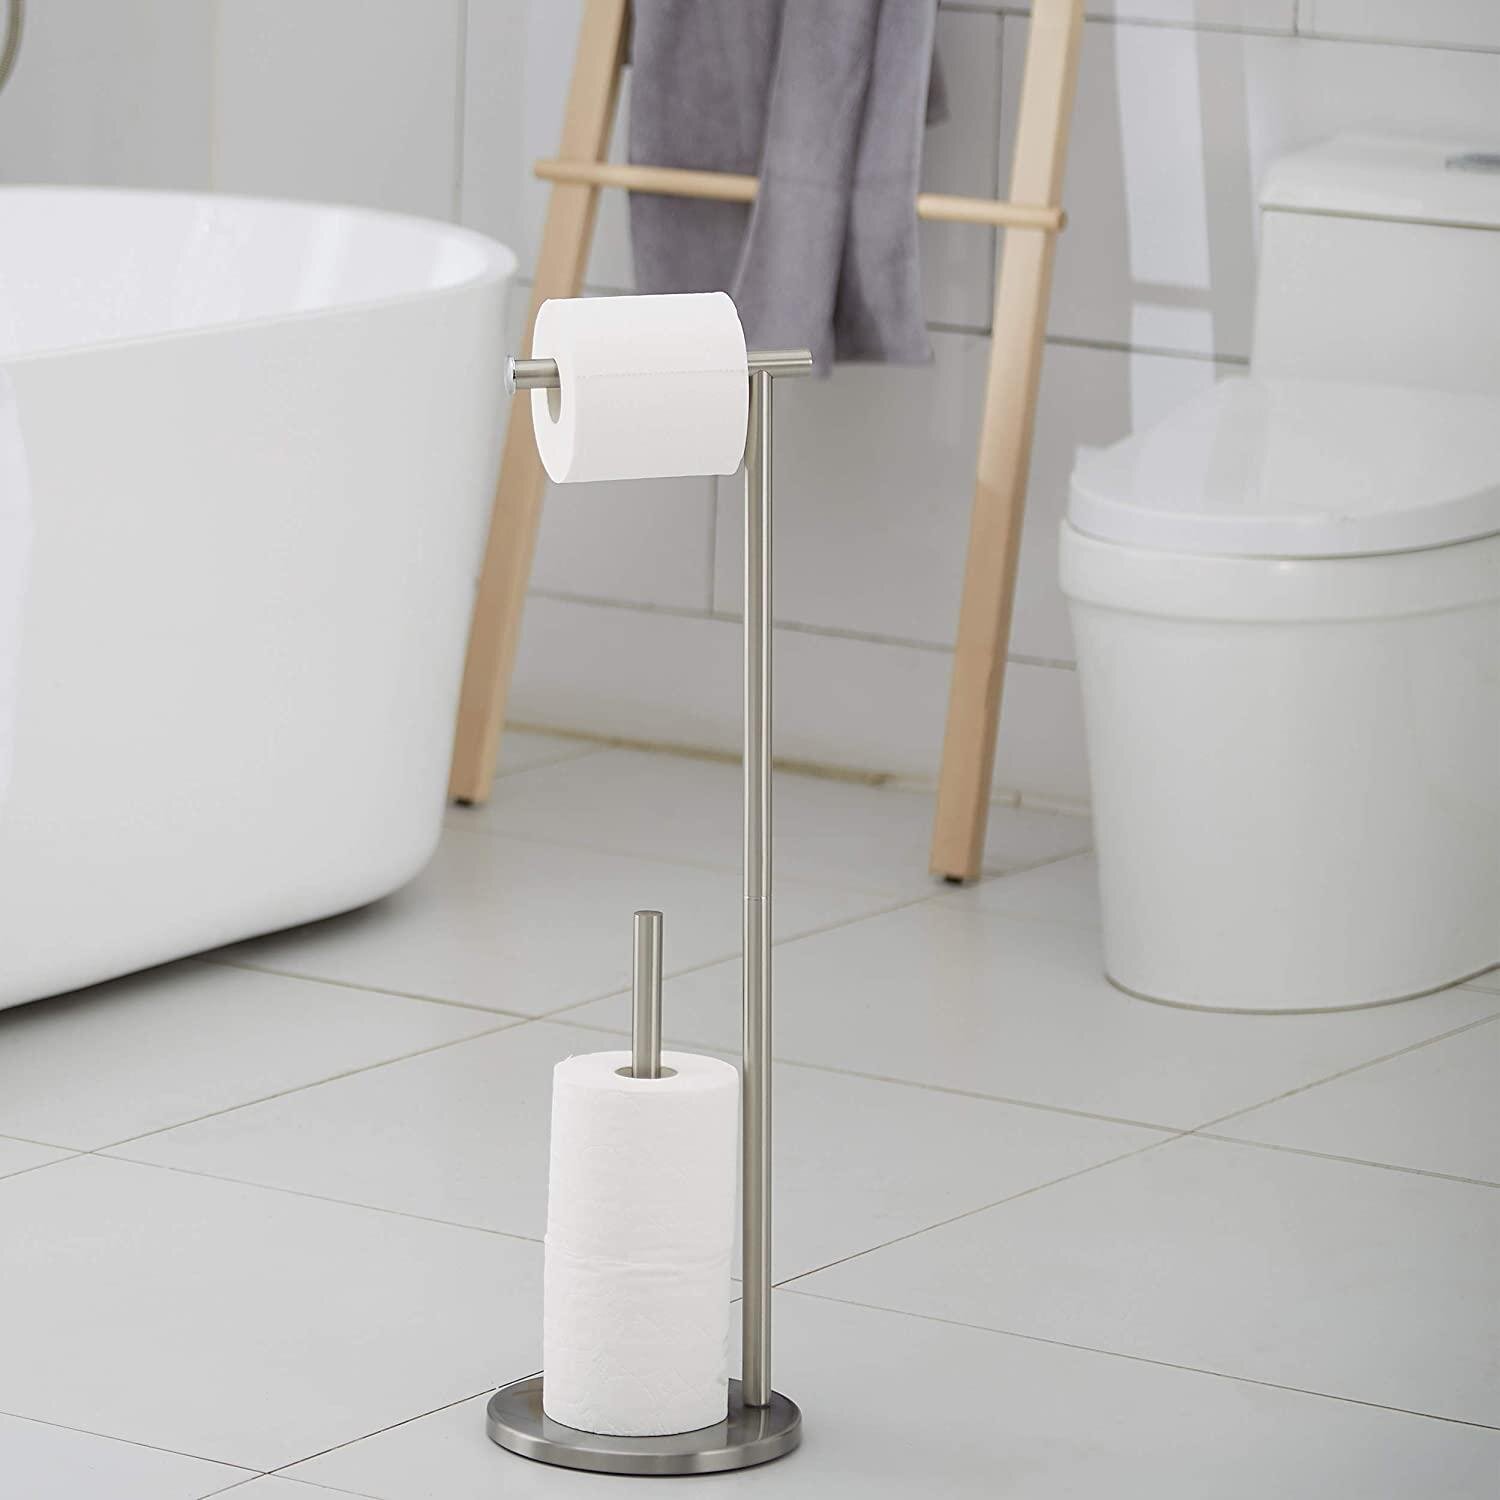 Stainless Steel Free Standing Toilet Paper Roll Dispenser 